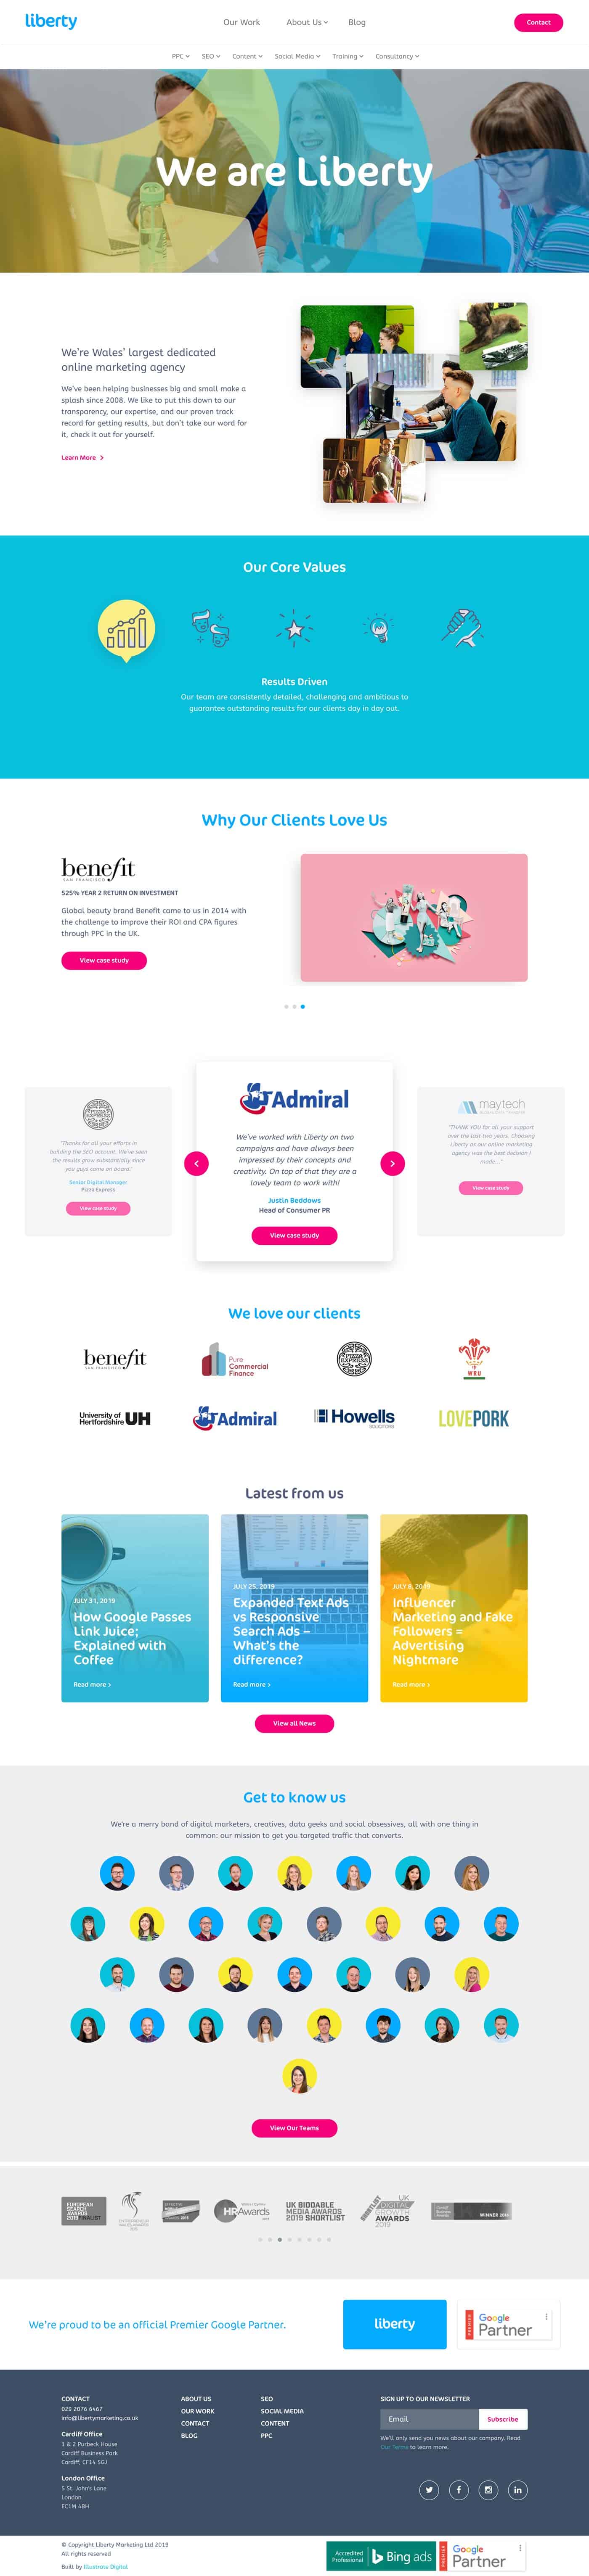 Liberty Marketing - Homepage